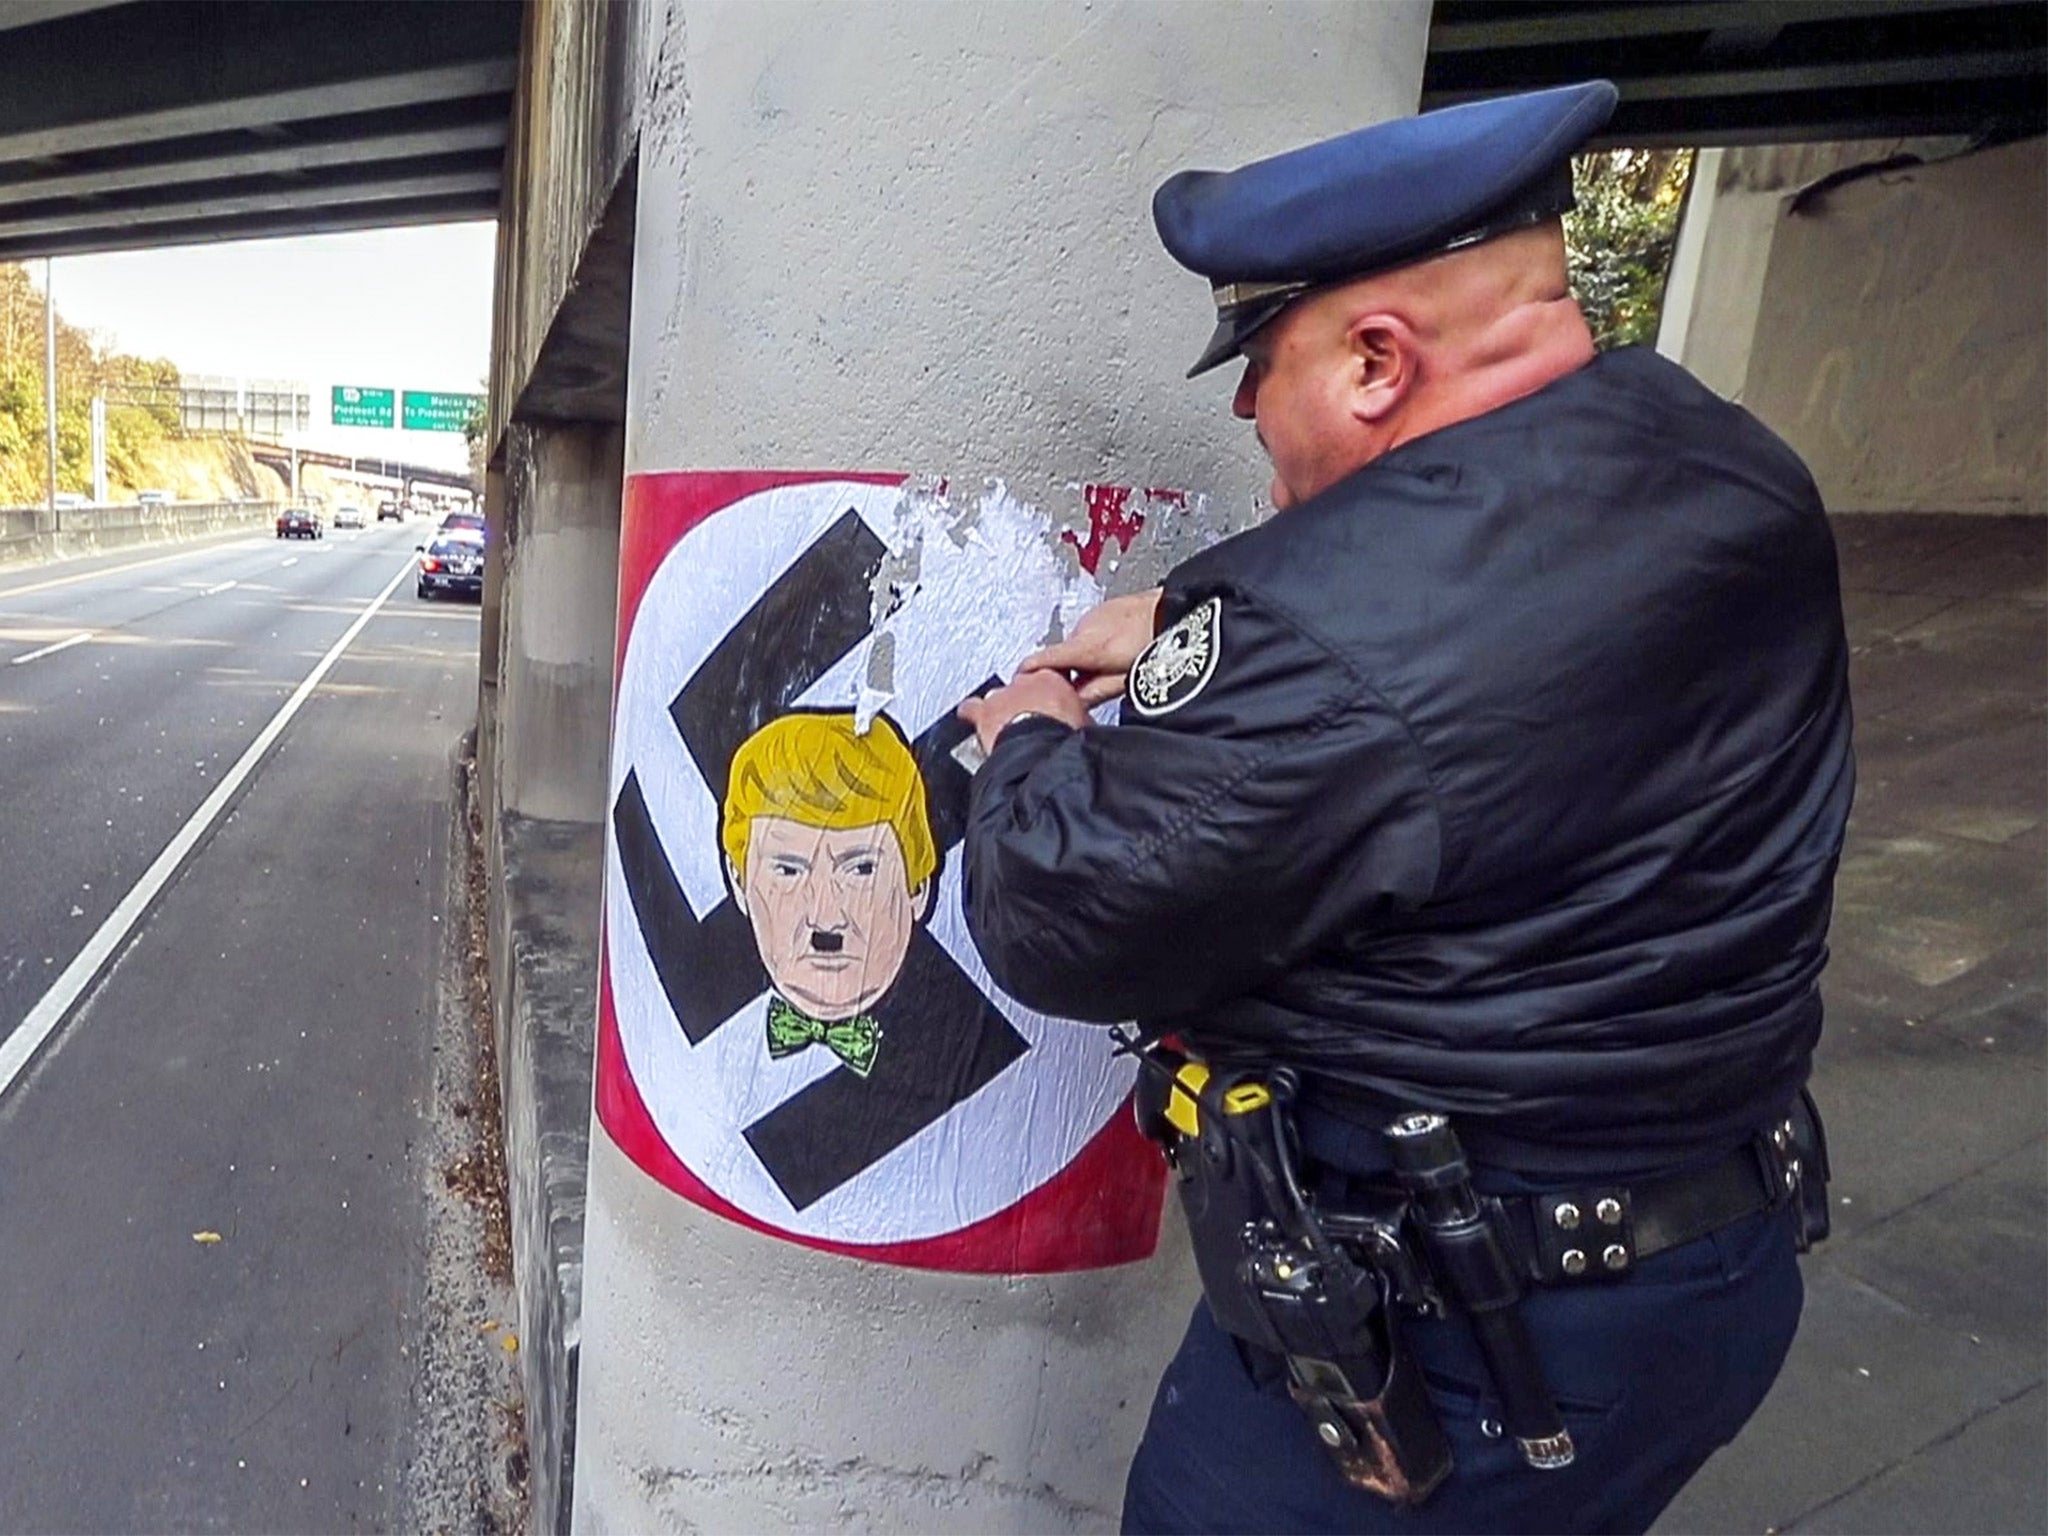 An Atlanta police officer removes graffiti depicting Donald Trump as Adolf Hitler